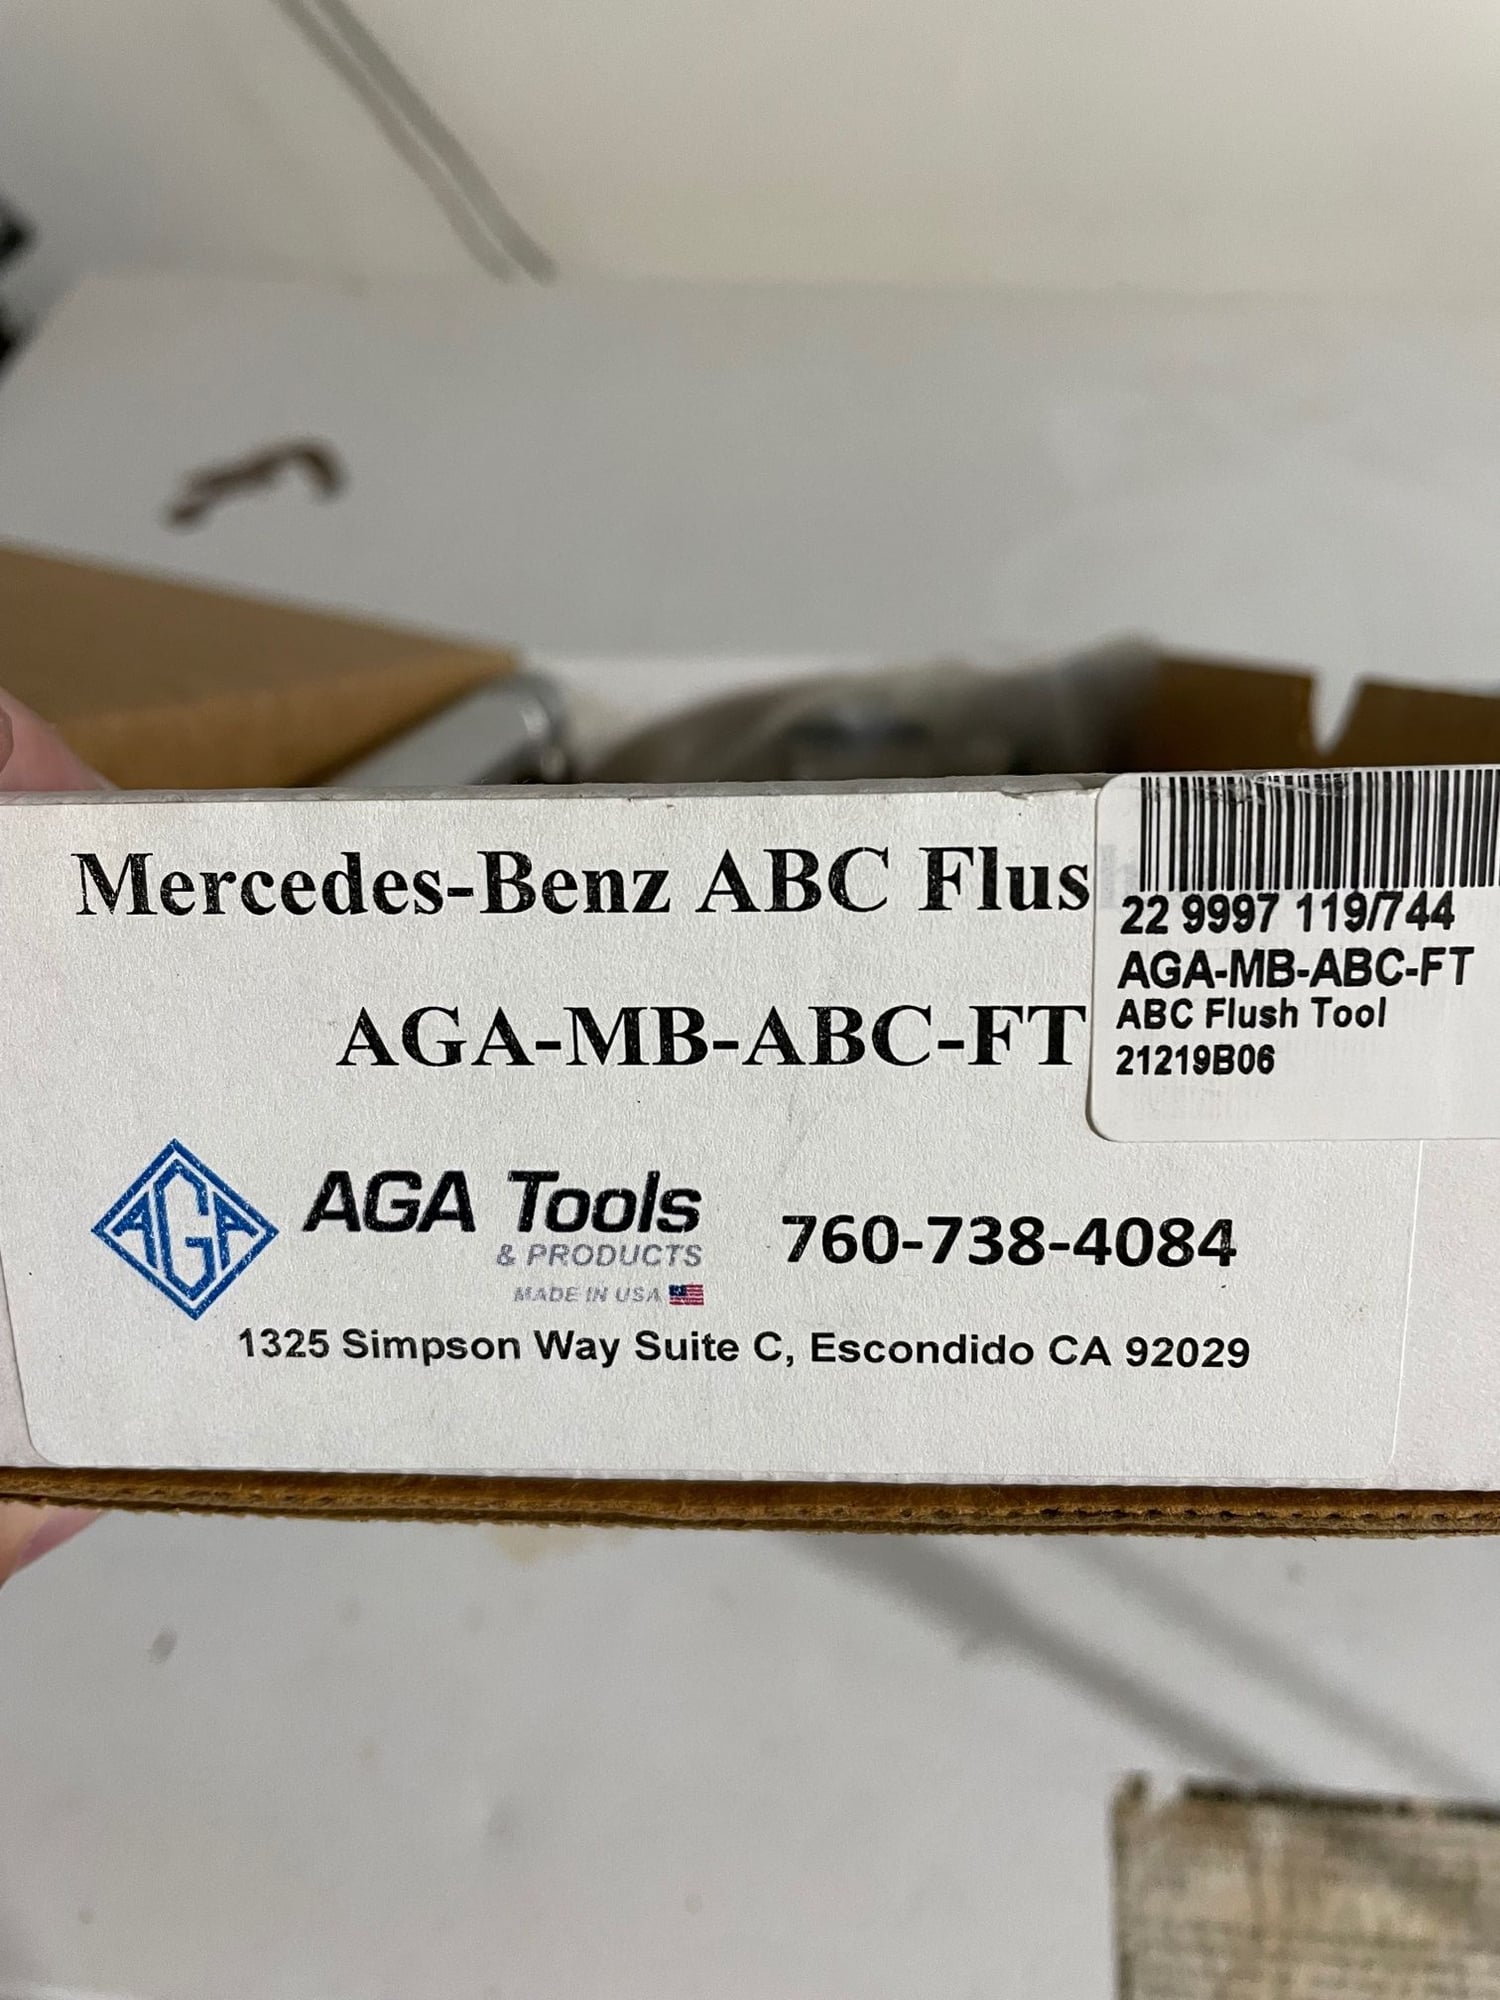 Steering/Suspension - Mercedes ABC Flush Tool - AGA 229997119 - Used - 0  All Models - Omaha, NE 68130, United States